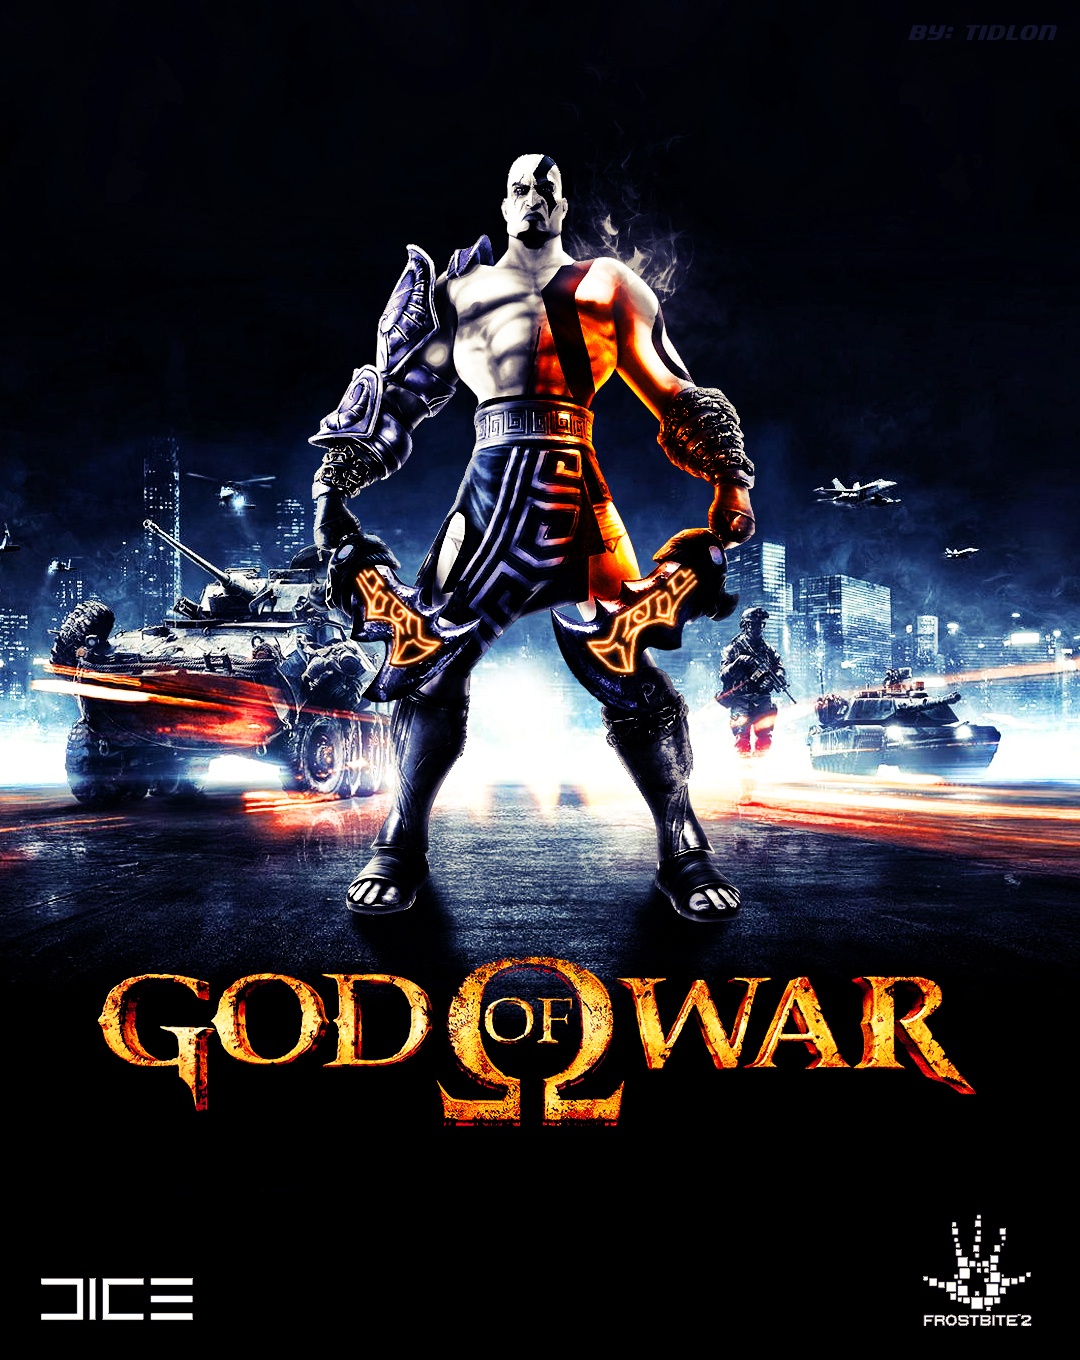 God of War battlefield 3 box cover